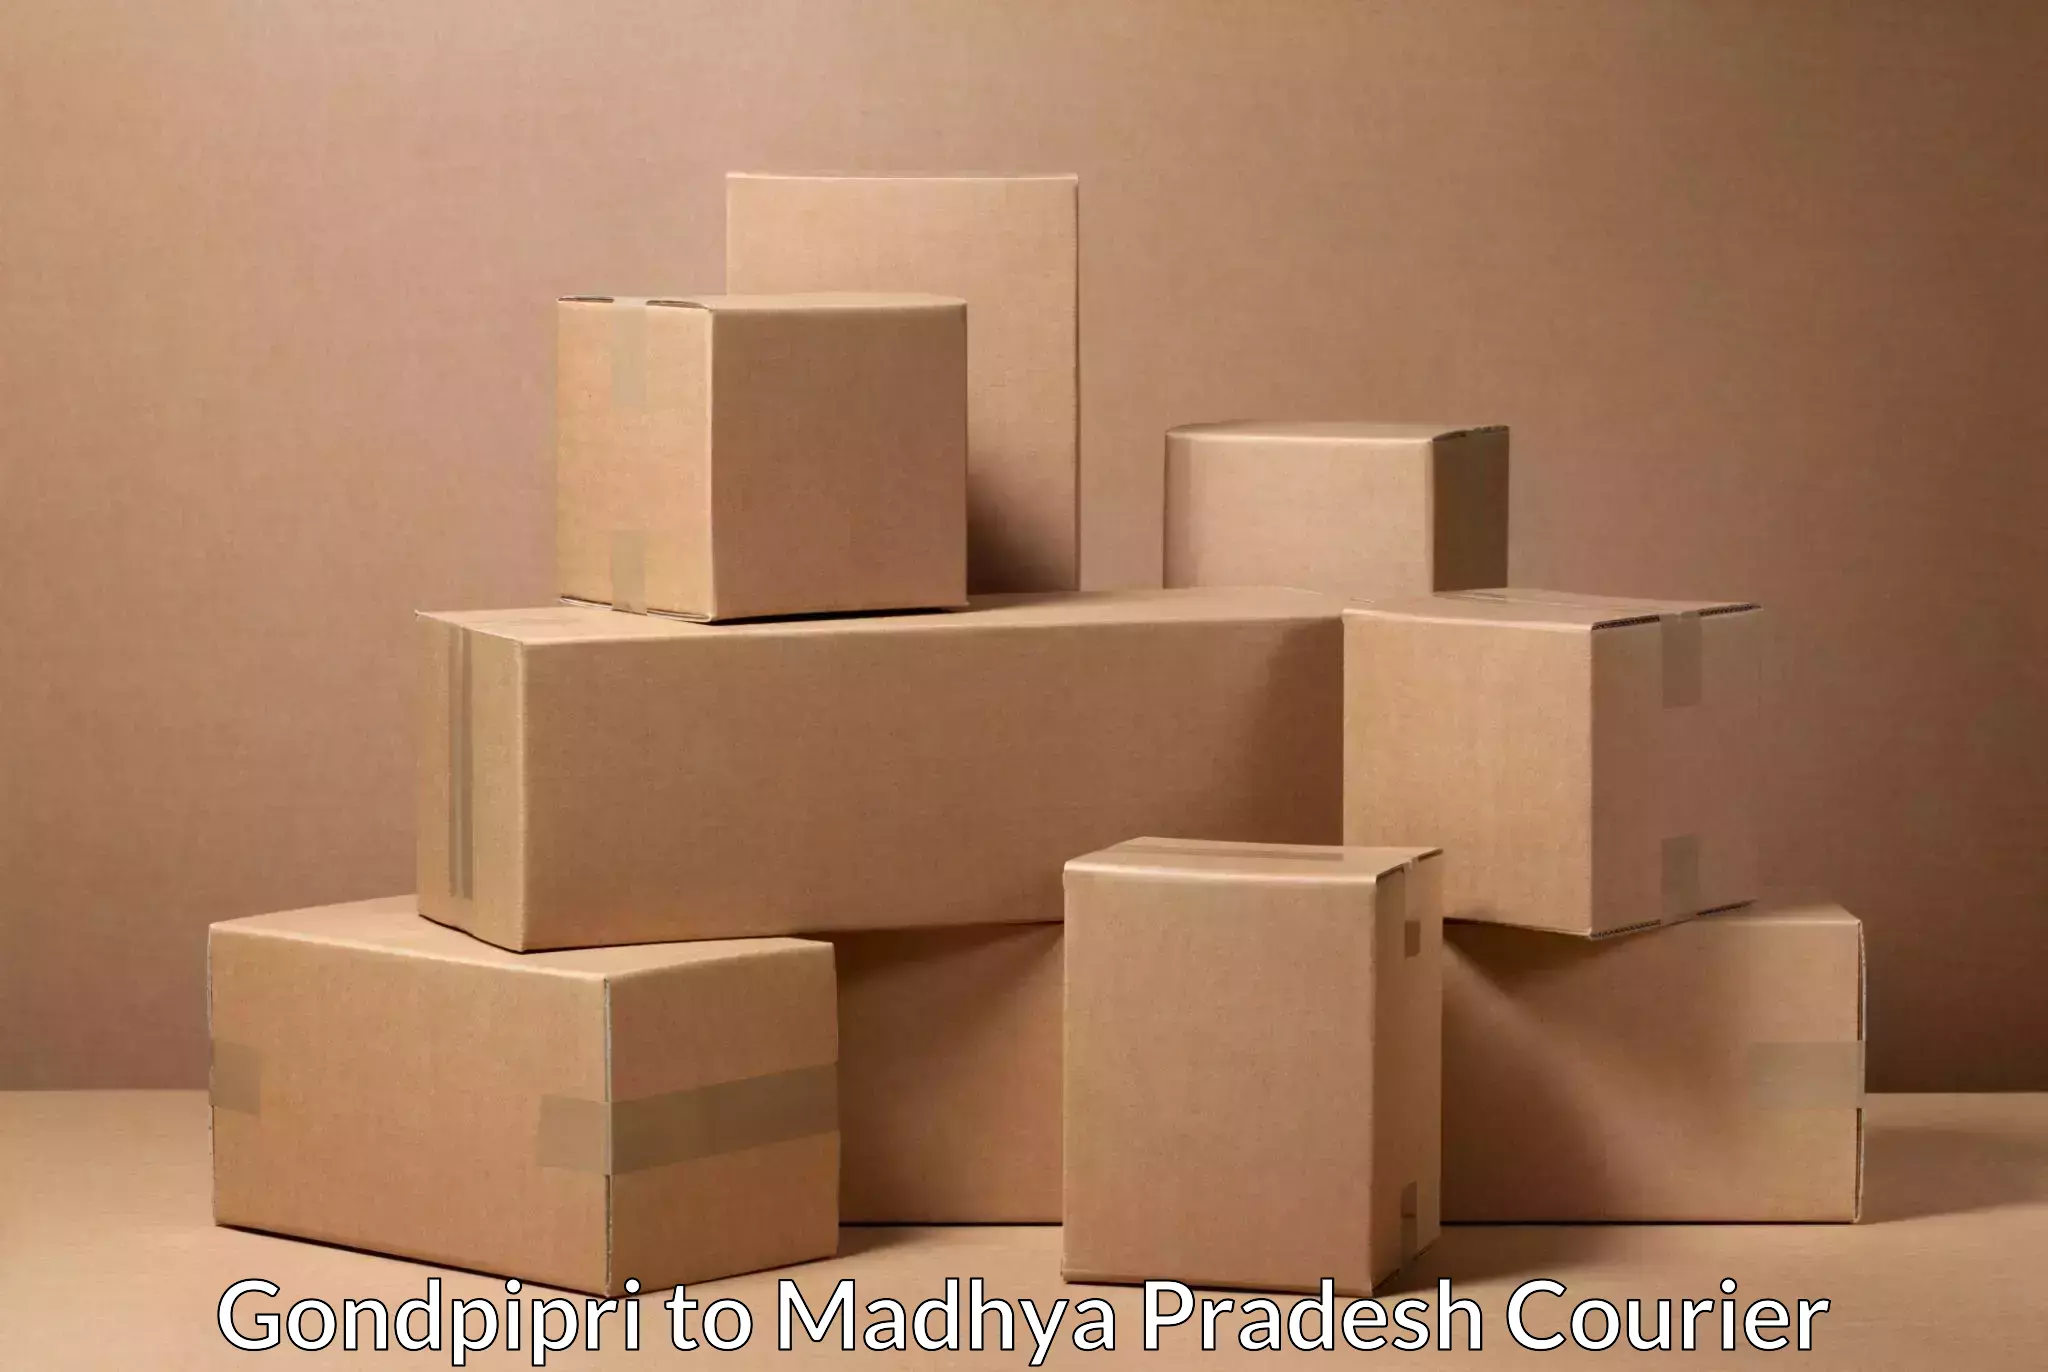 Multi-package shipping in Gondpipri to Maheshwar